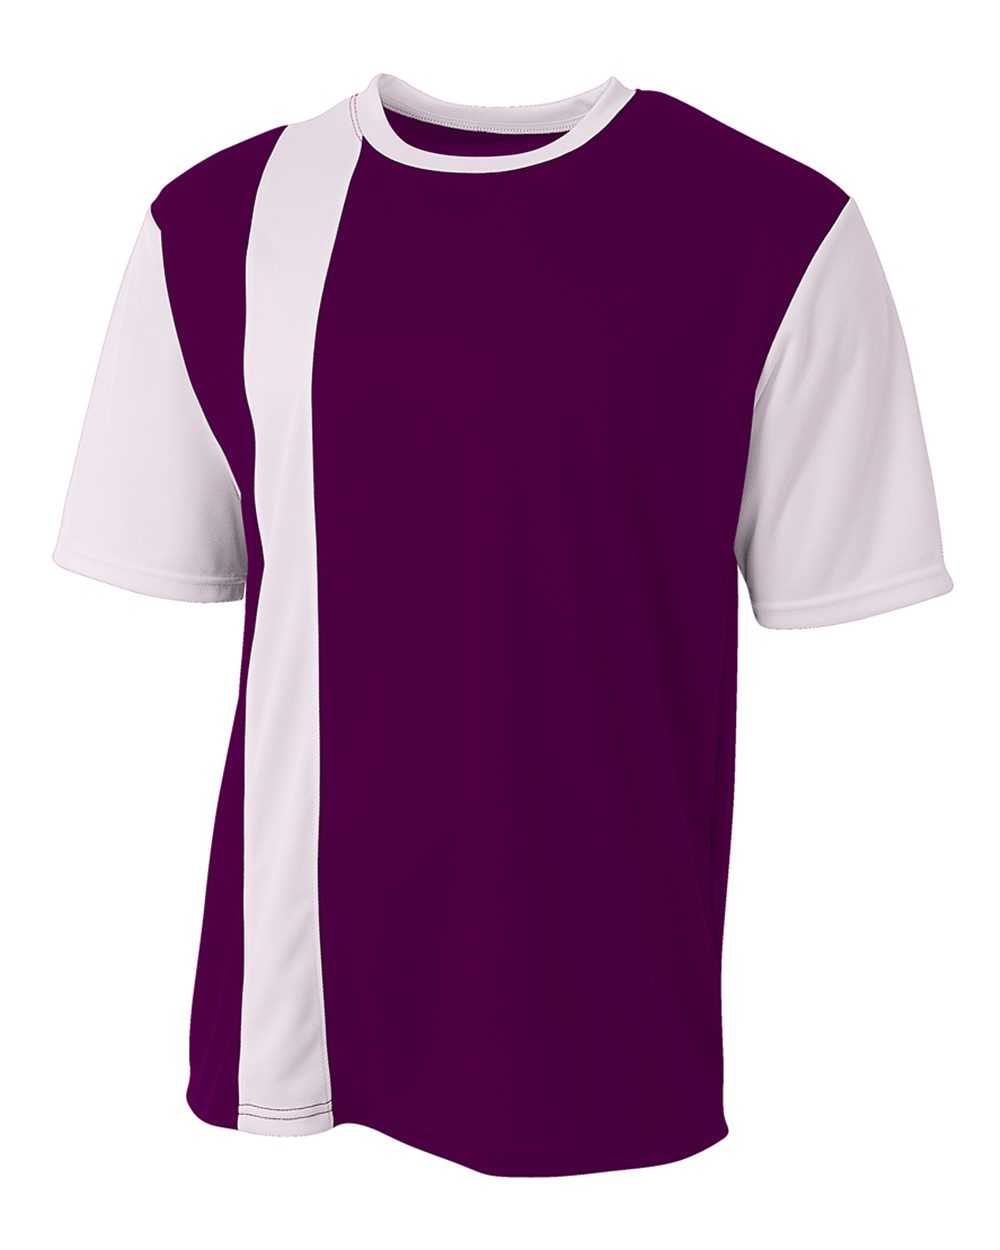 A4 N3016 Legend Soccer Jersey - Purple White - HIT a Double